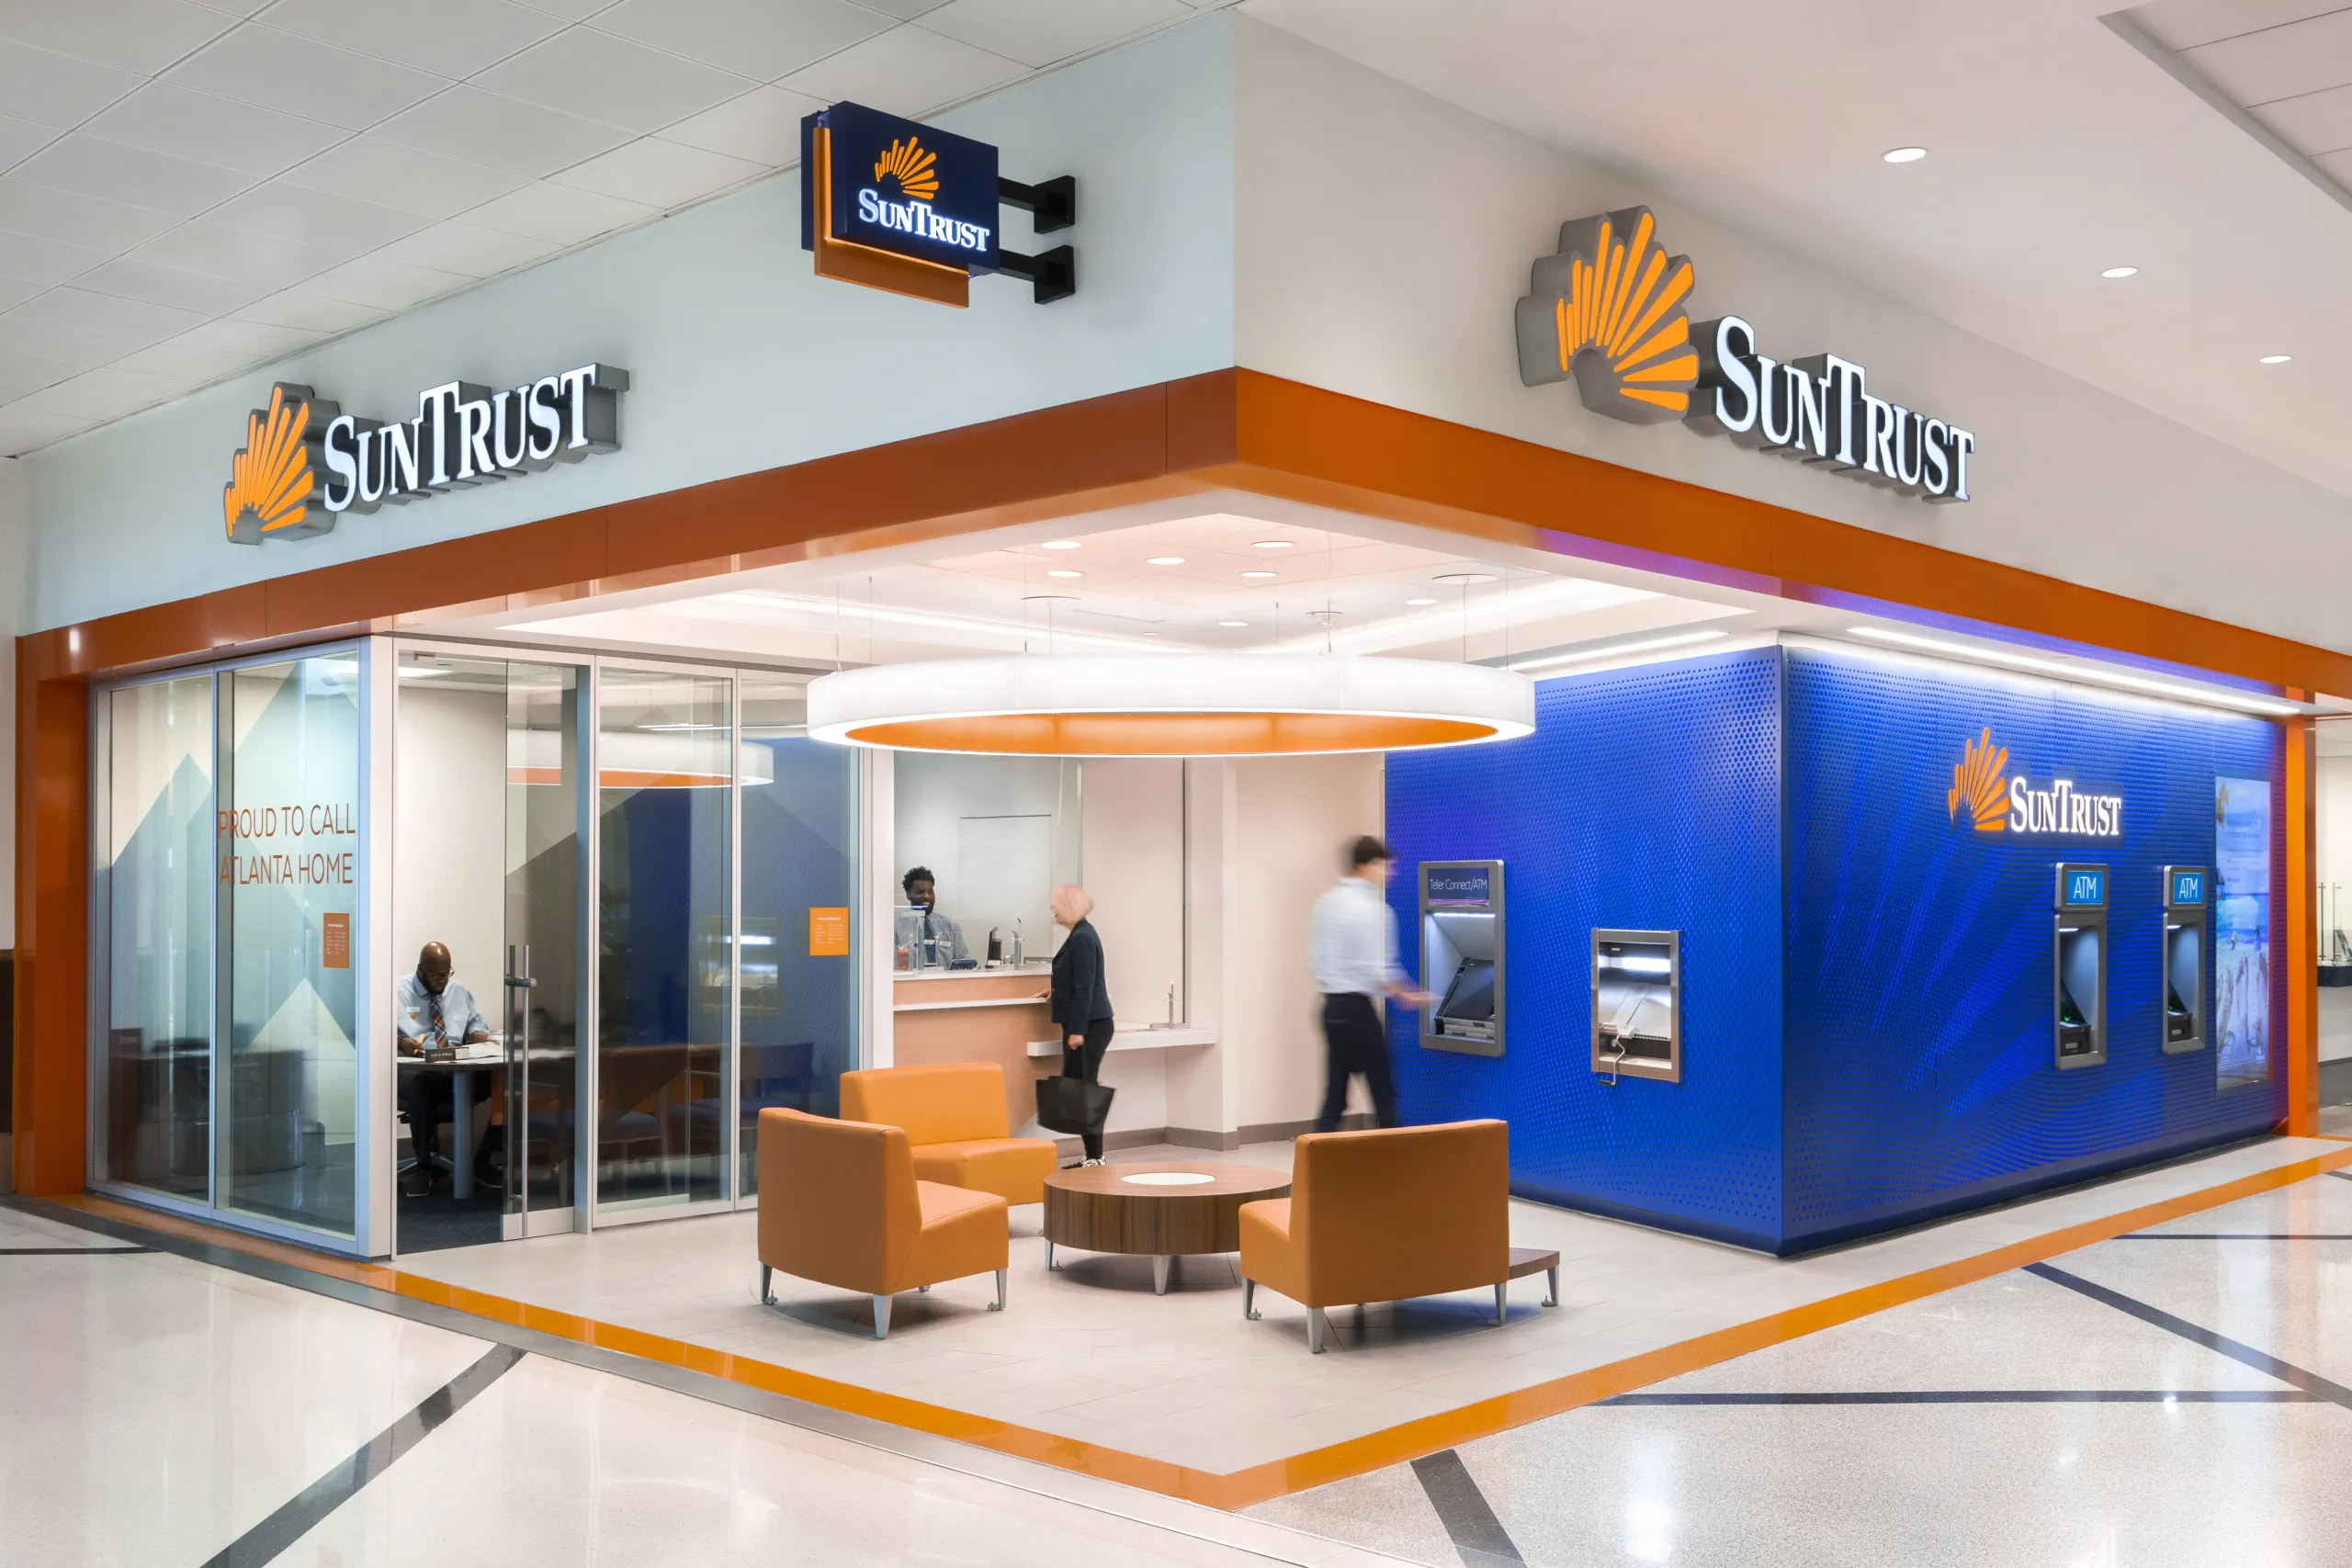 Is SunTrust a Florida Bank?